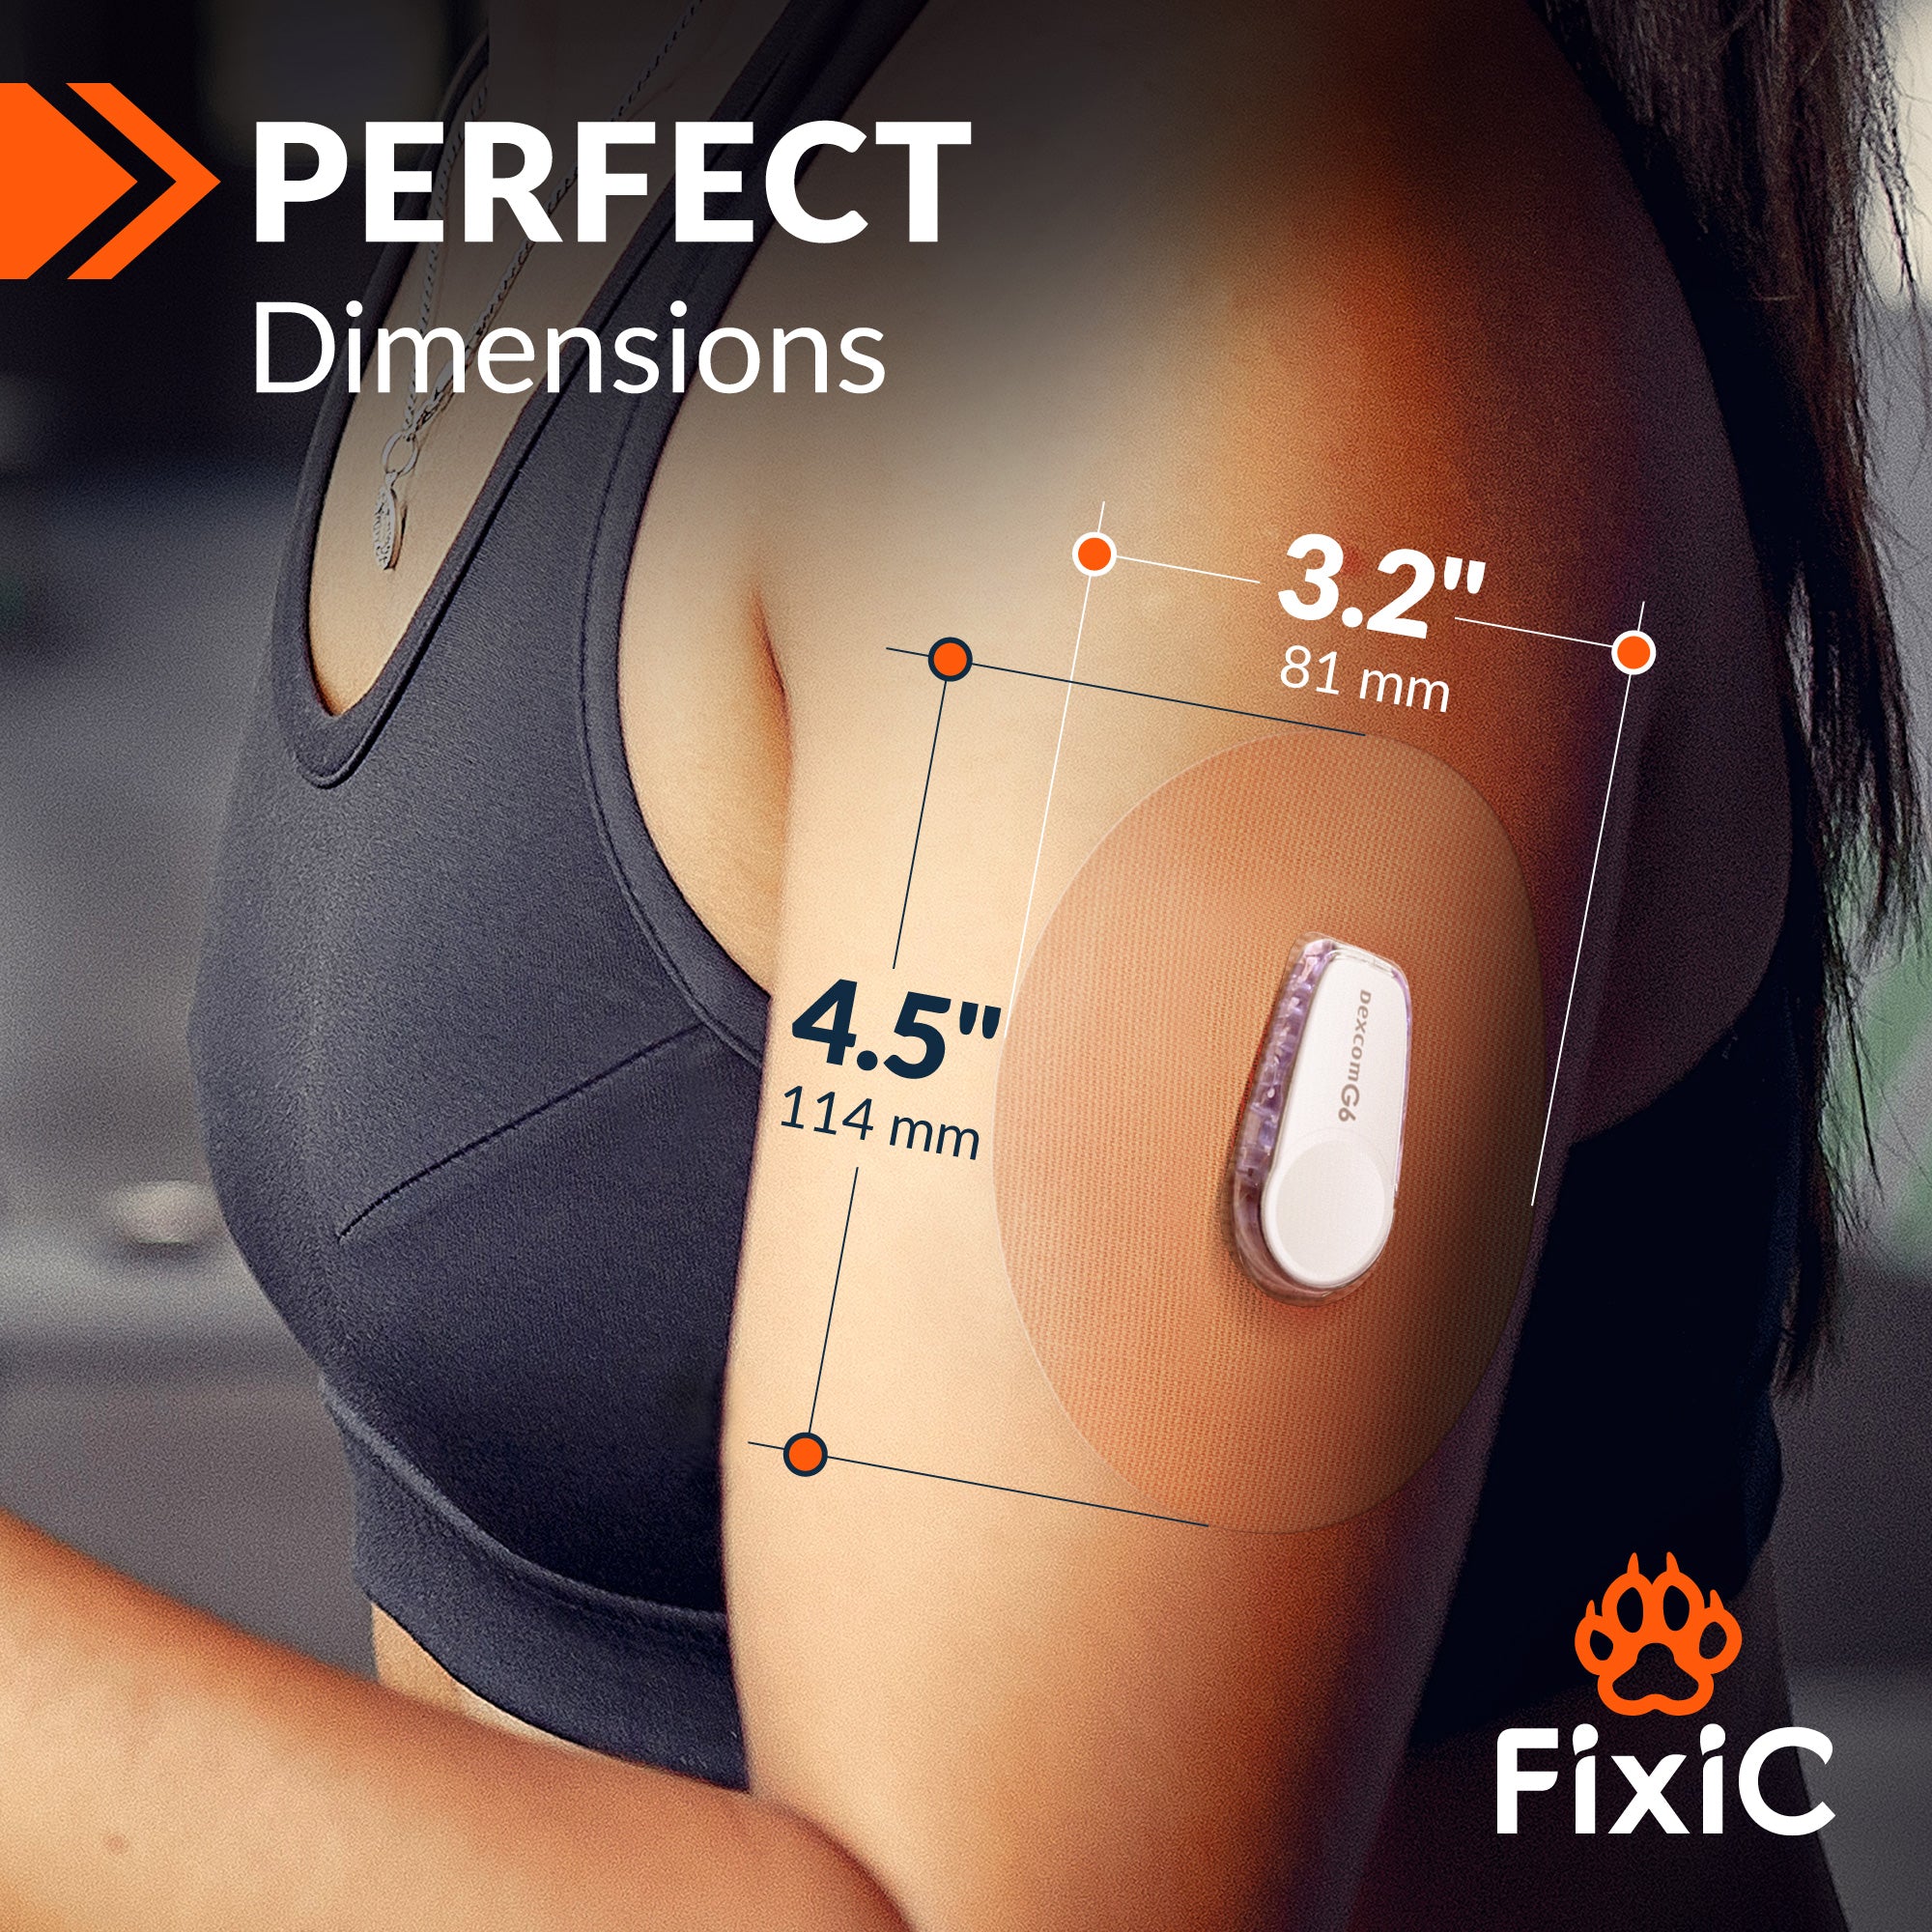  OhmRx Dexcom G6 Adhesive Patches Waterproof - Pre Cut Pack of  25 Black Color Dexcom G6 Sensors Patches Lasts 10-14 Days Dexcom G6 Sensor  Covers : Health & Household